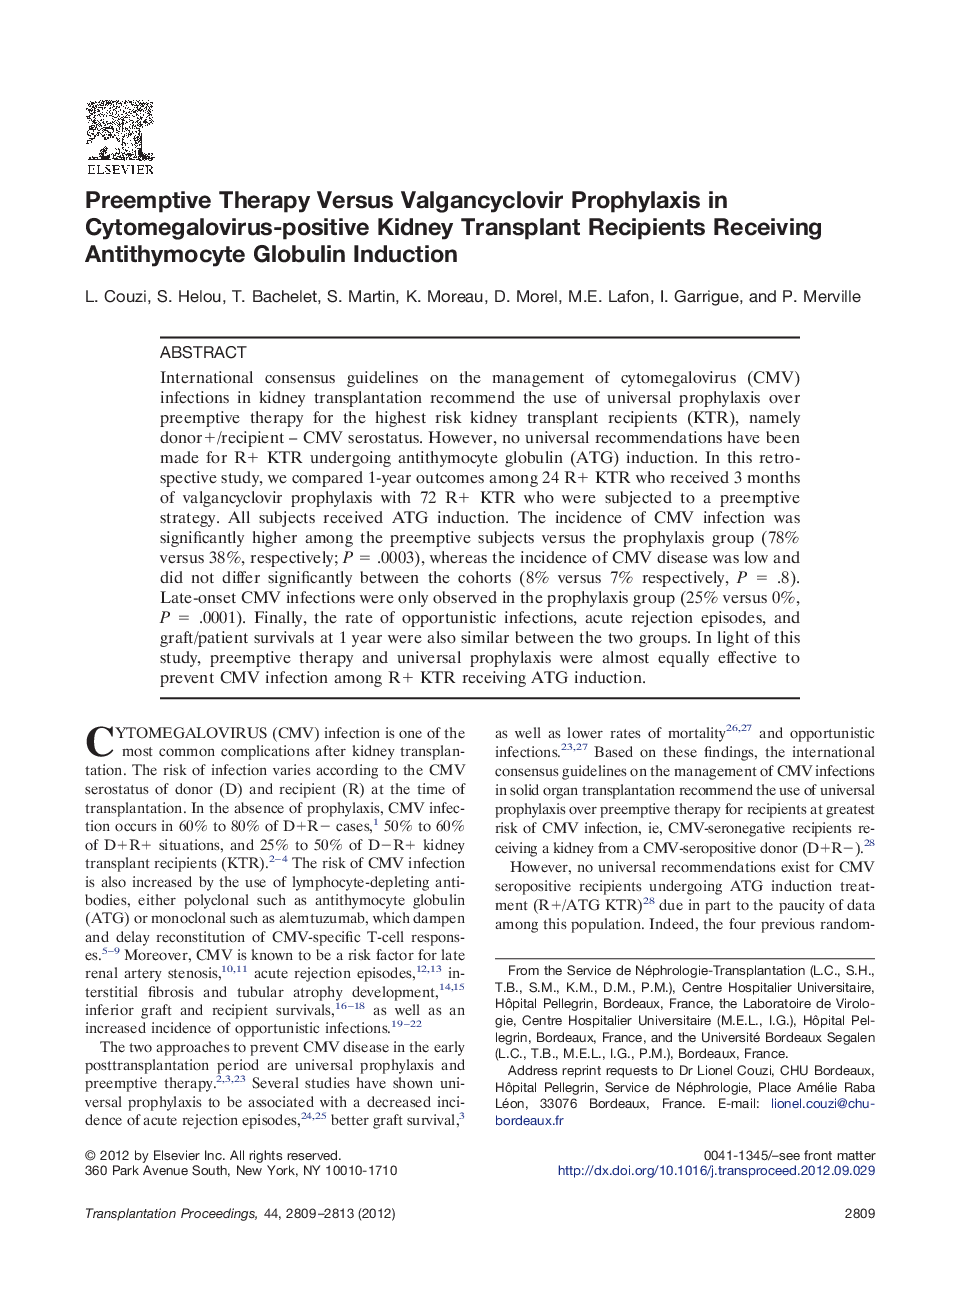 Preemptive Therapy Versus Valgancyclovir Prophylaxis in Cytomegalovirus-positive Kidney Transplant Recipients Receiving Antithymocyte Globulin Induction